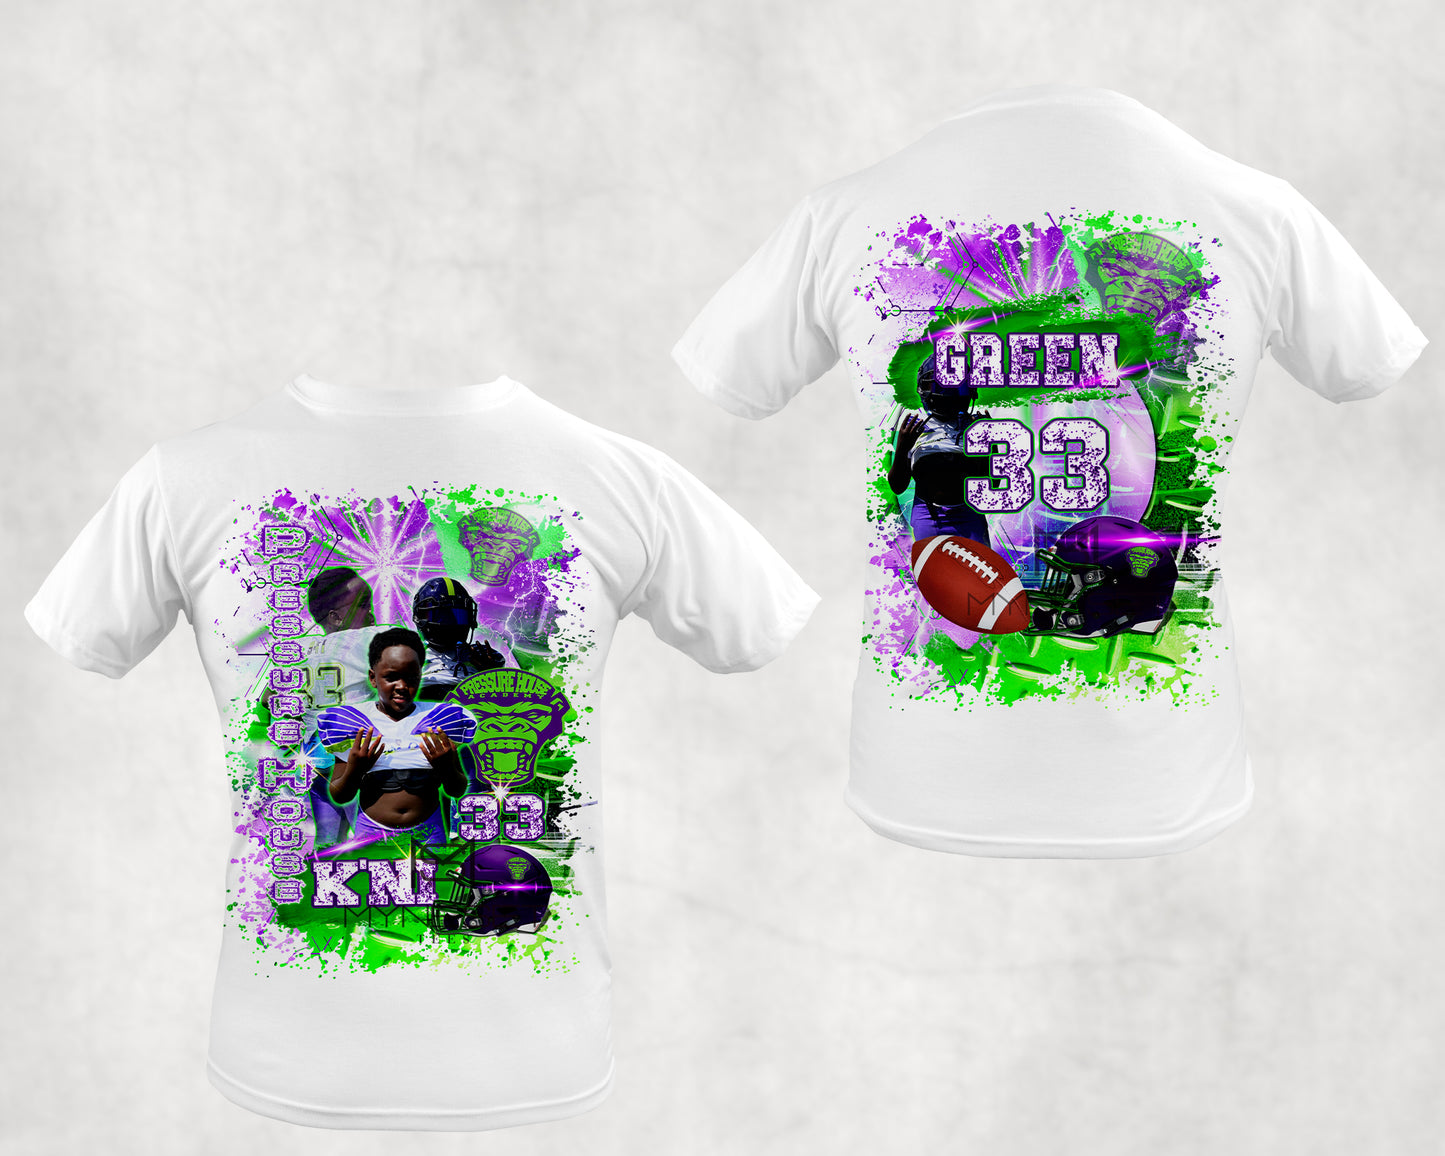 Pressure House Little League Football Team Centered Front T-Shirt Design